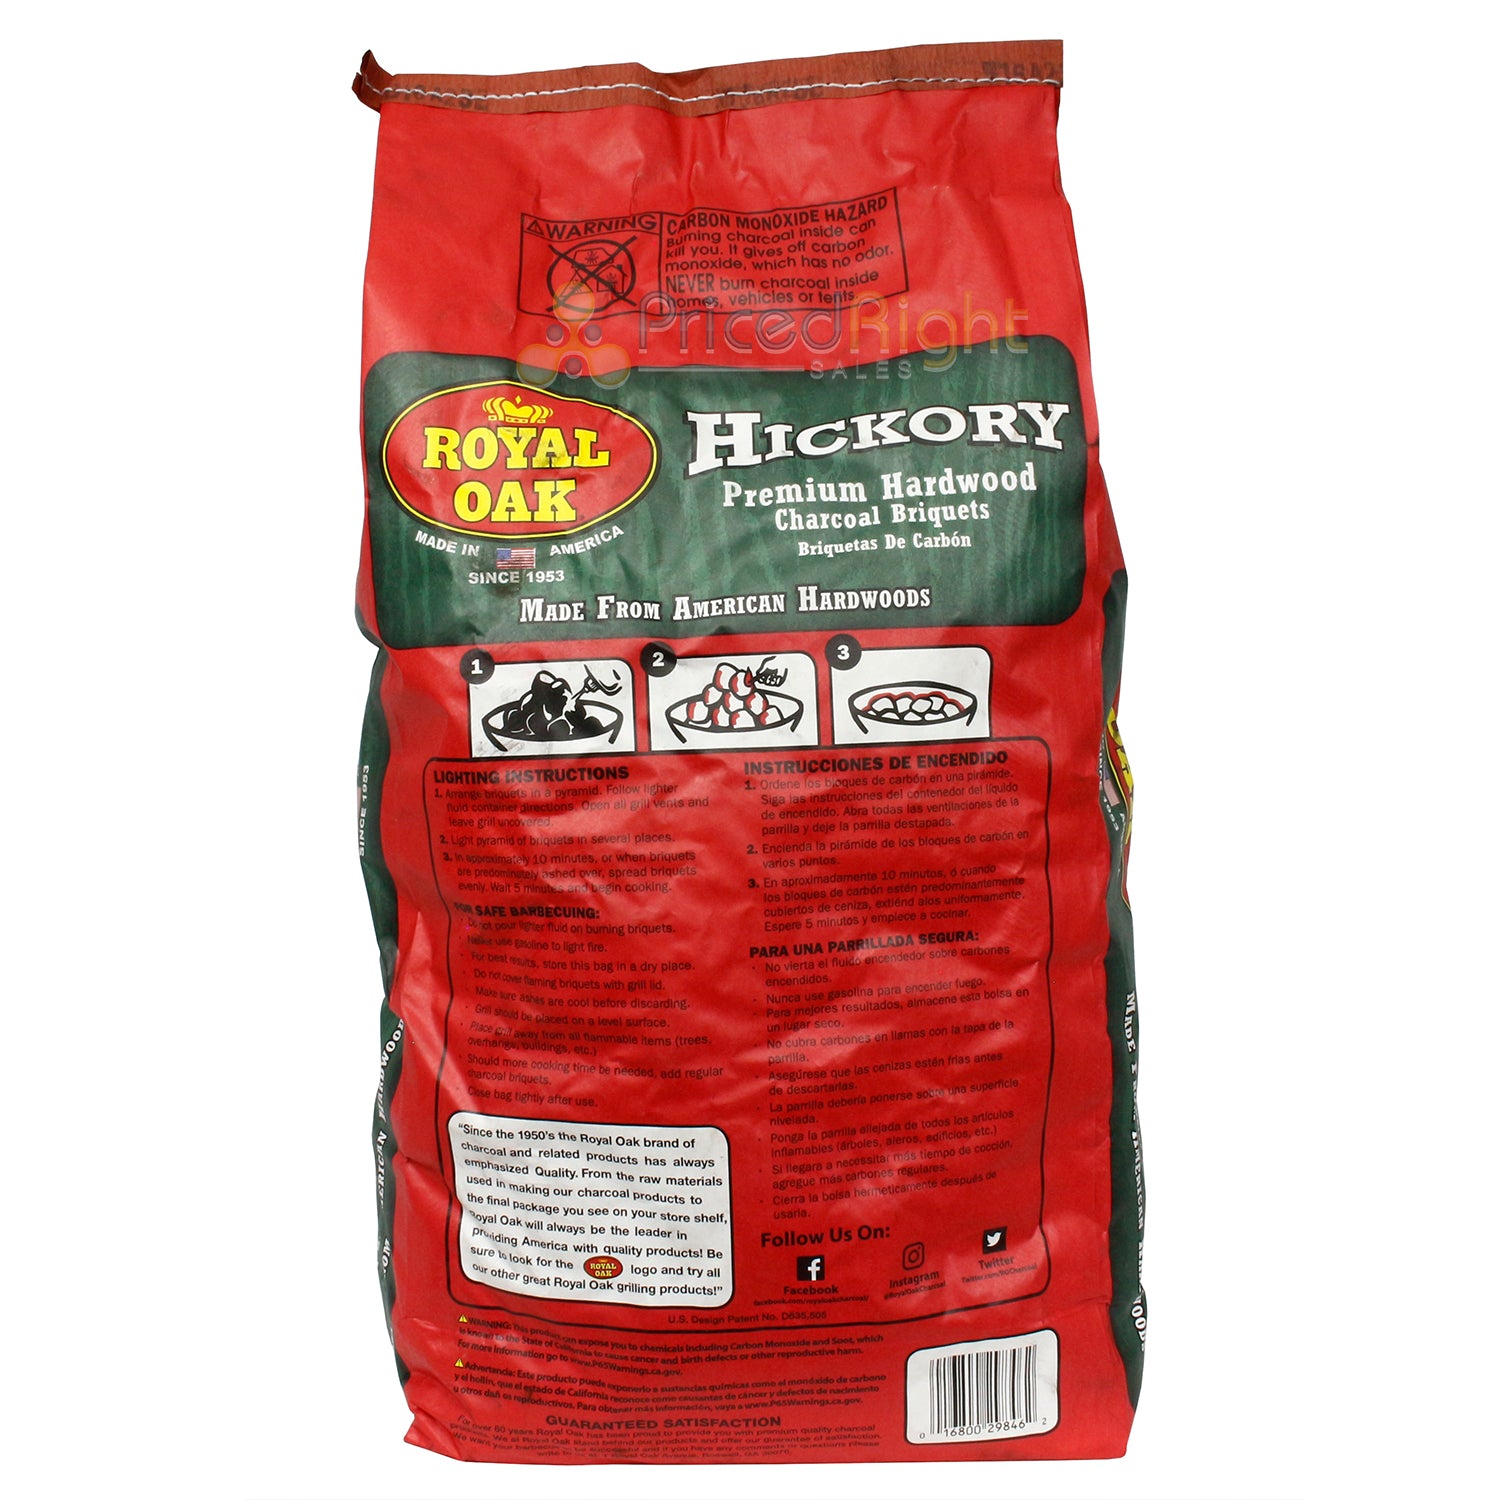 Royal Oak Hickory Charcoal Briquets Premium Hardwood Fast-Start Ridges 16.6 LB